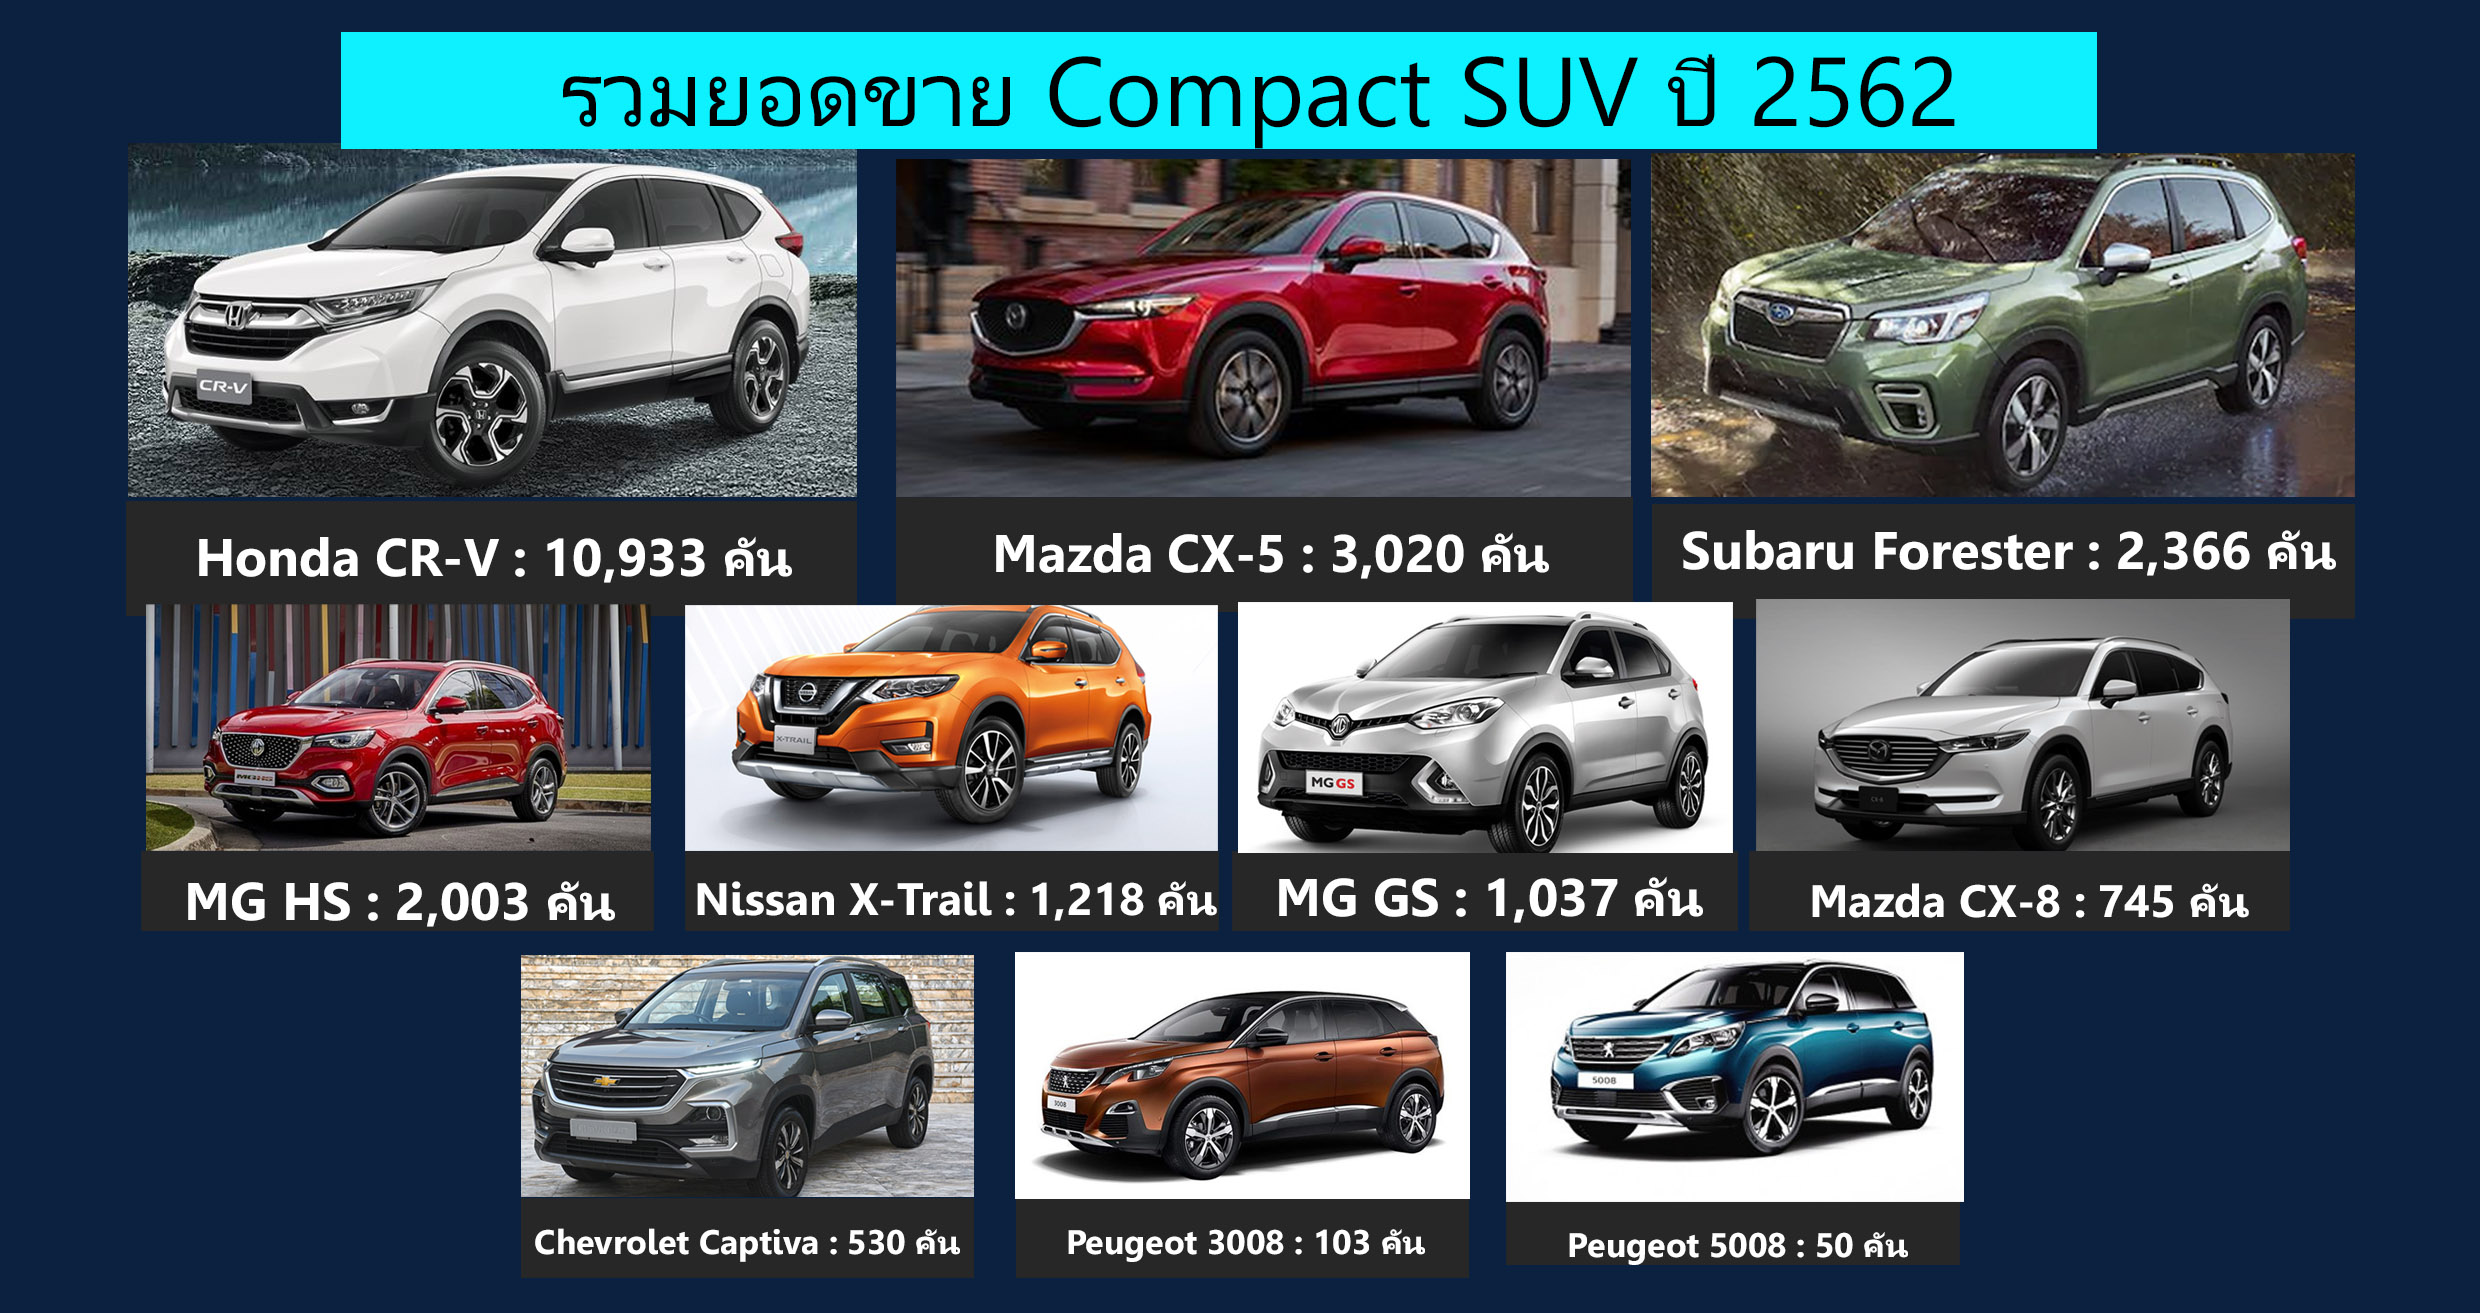 Honda CR-V อันดับหนึ่ง ยอดขาย Compact SUV ปี 2562